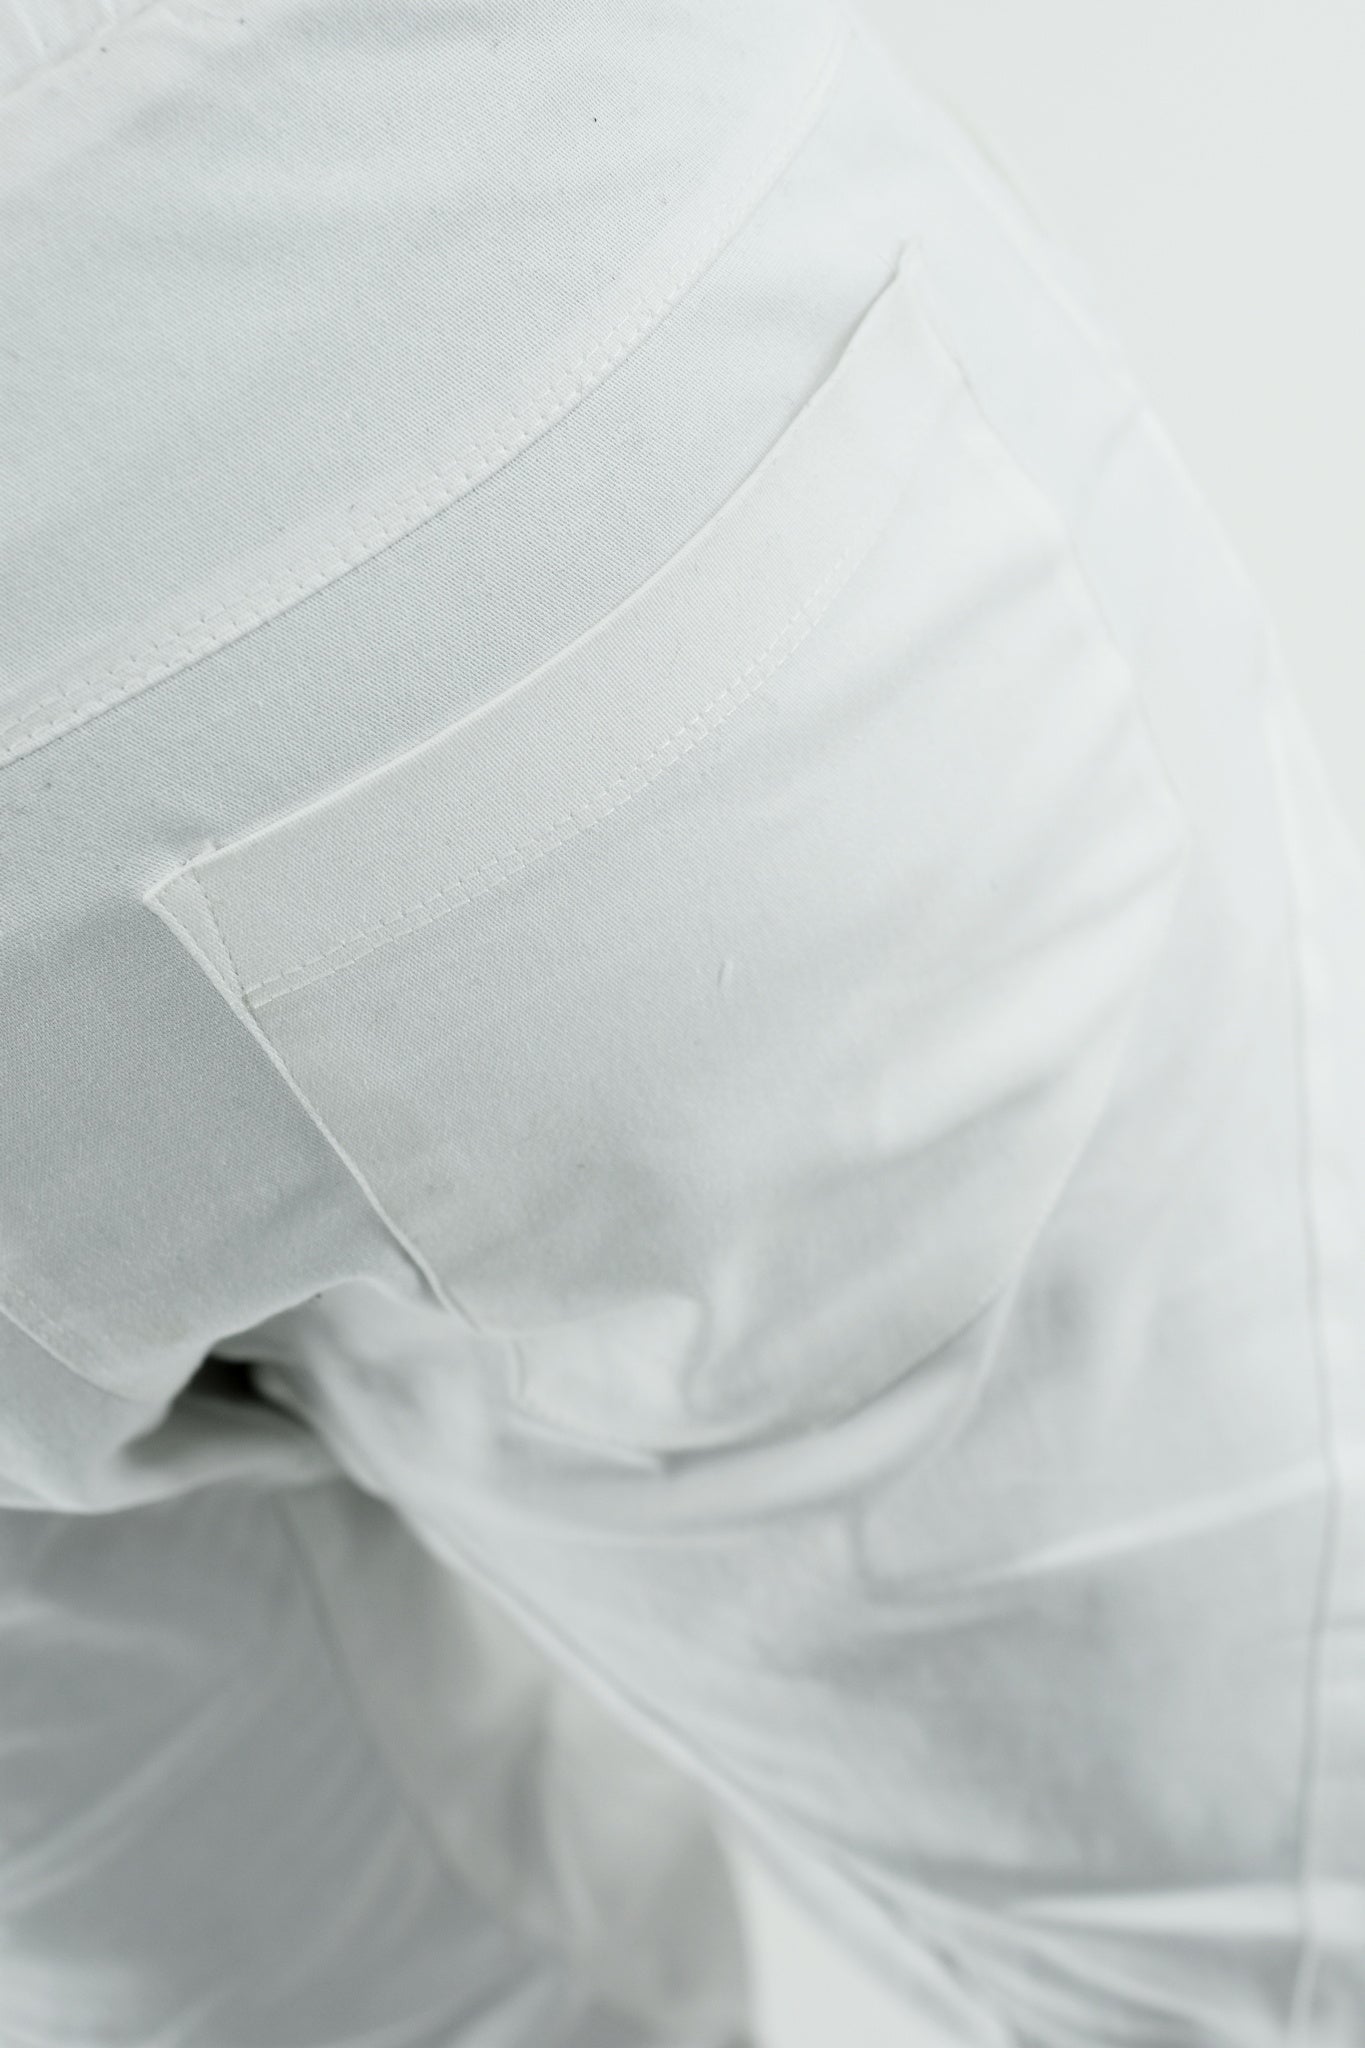 Menswear Off-White Stretch Twill Jogger ZG5476